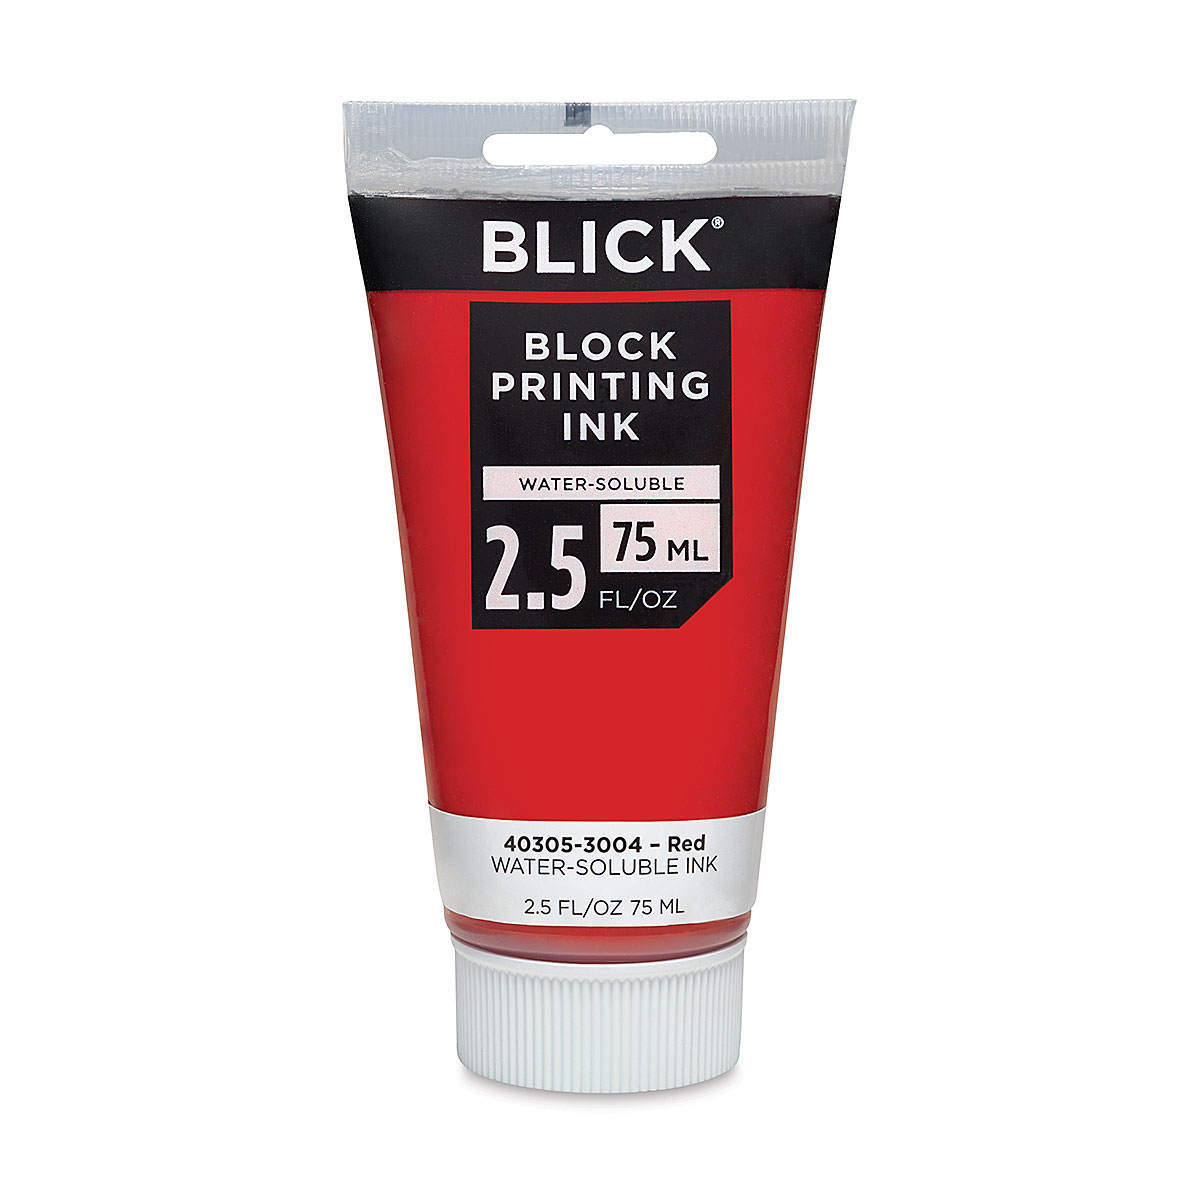 Blick Waterbased Acrylic Fabric Screen Printing Ink